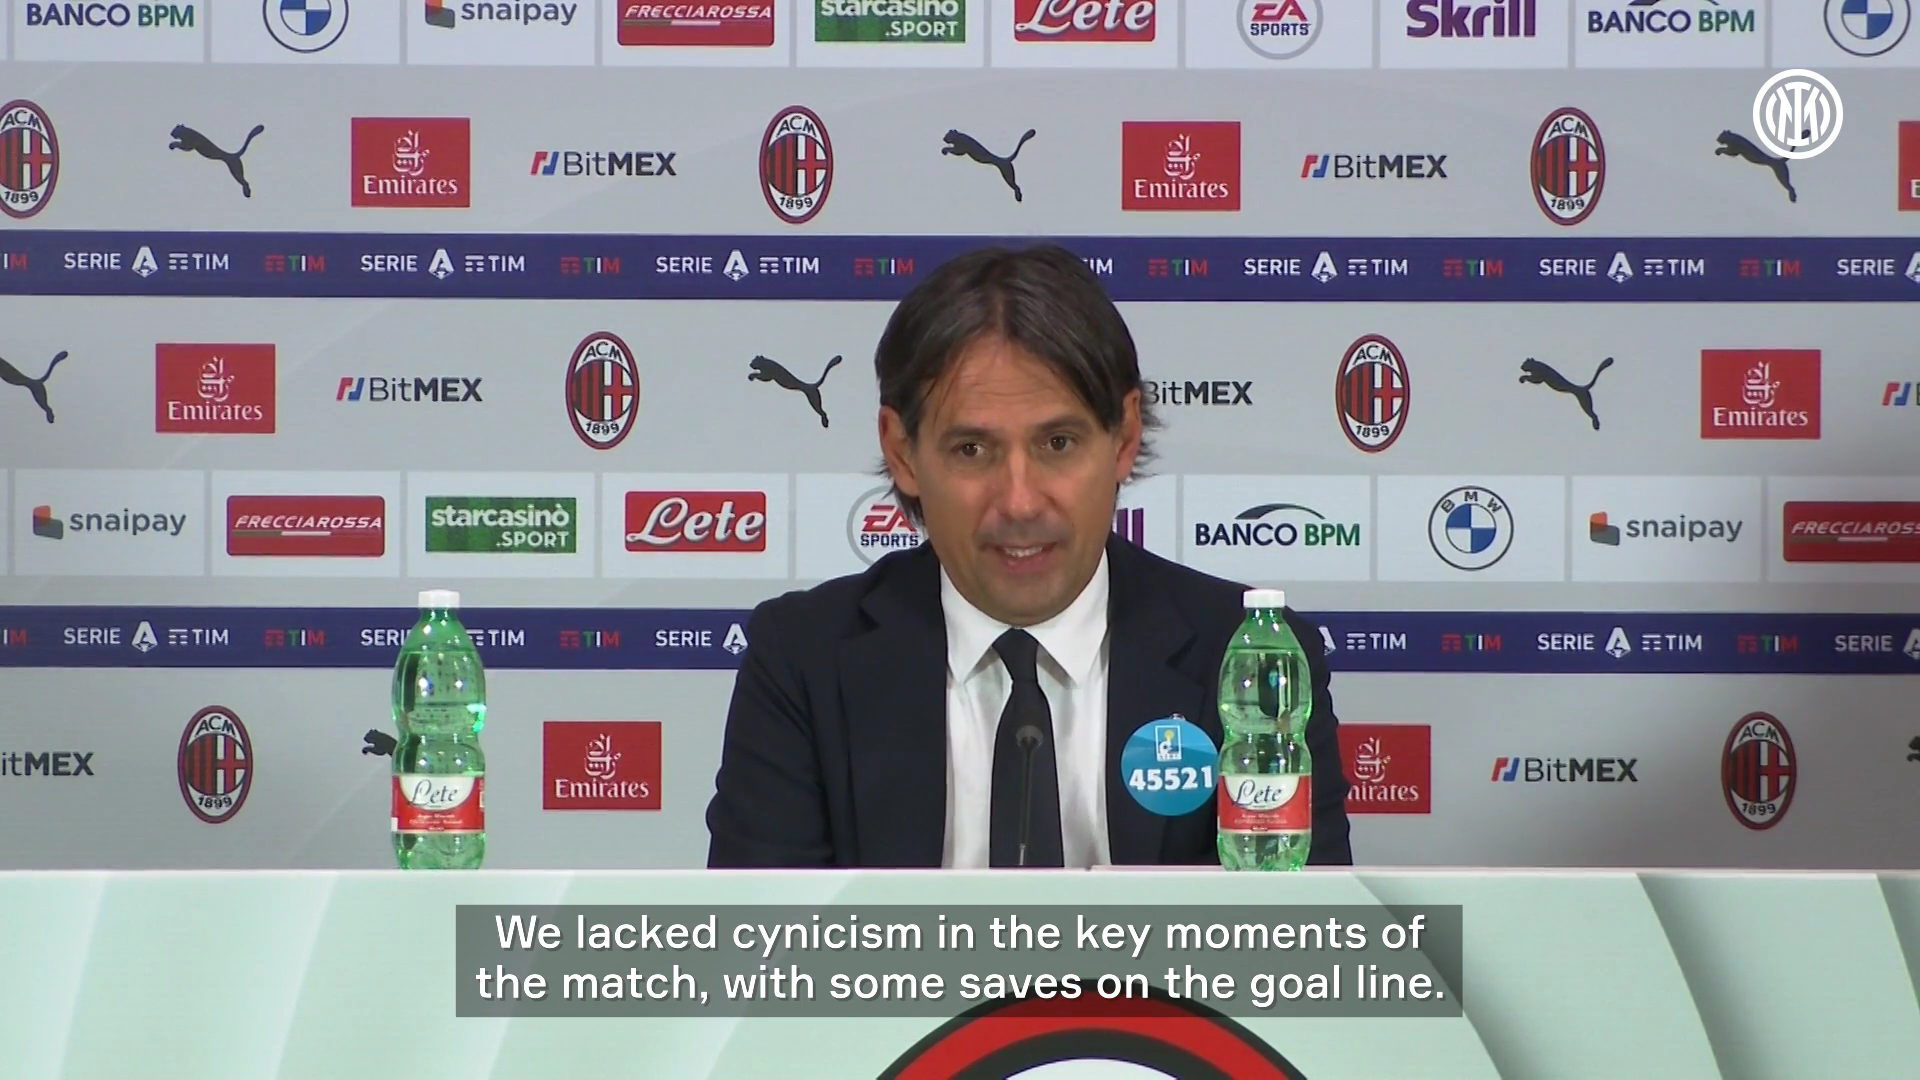 VIDEO: Simone Inzaghi yakin Derby Della Madonina Dapat Tingkatkan Kepercayaan Diri Timnya